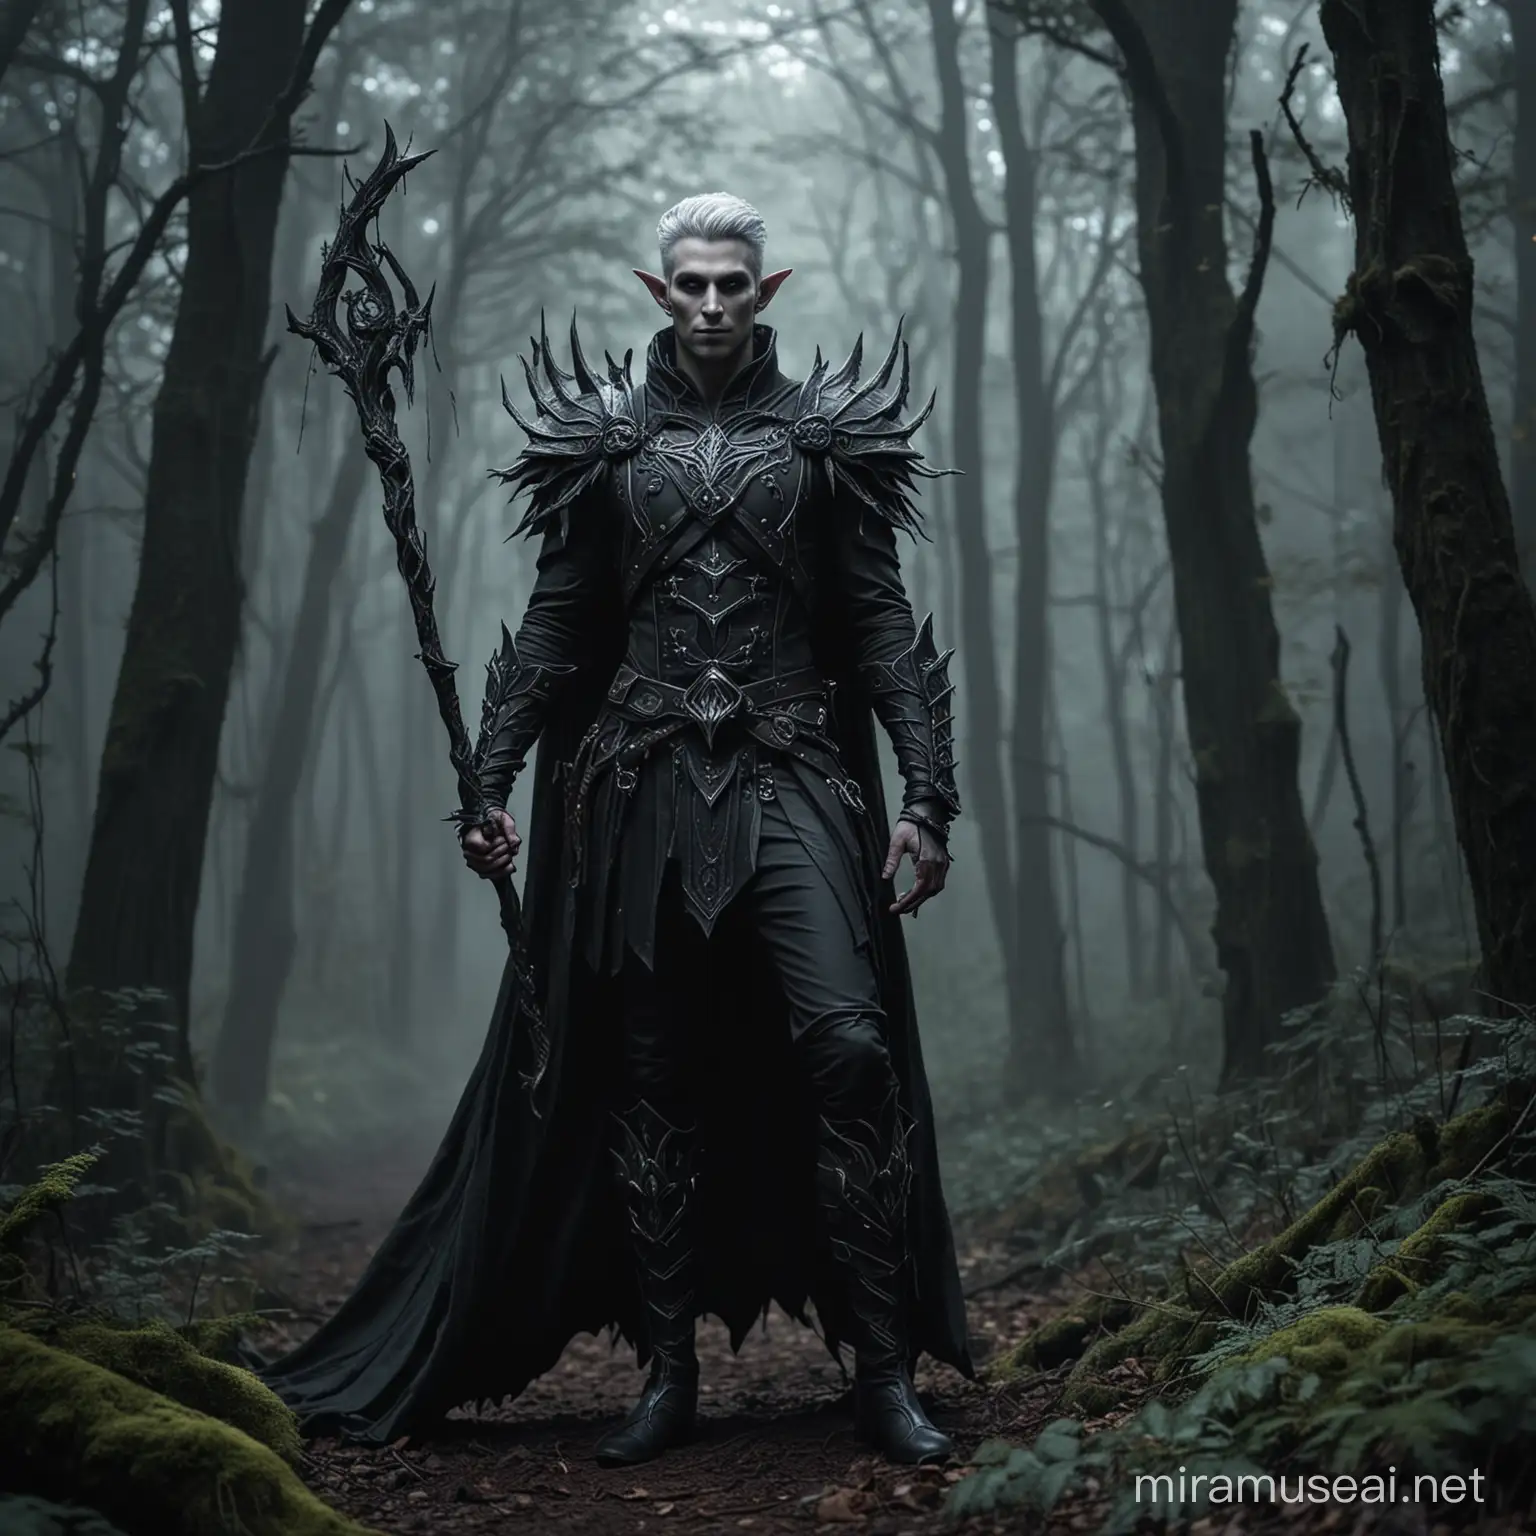 Ethereal Male Elf Banshee in Unholy Necromancer Attire Amidst Dark Forest